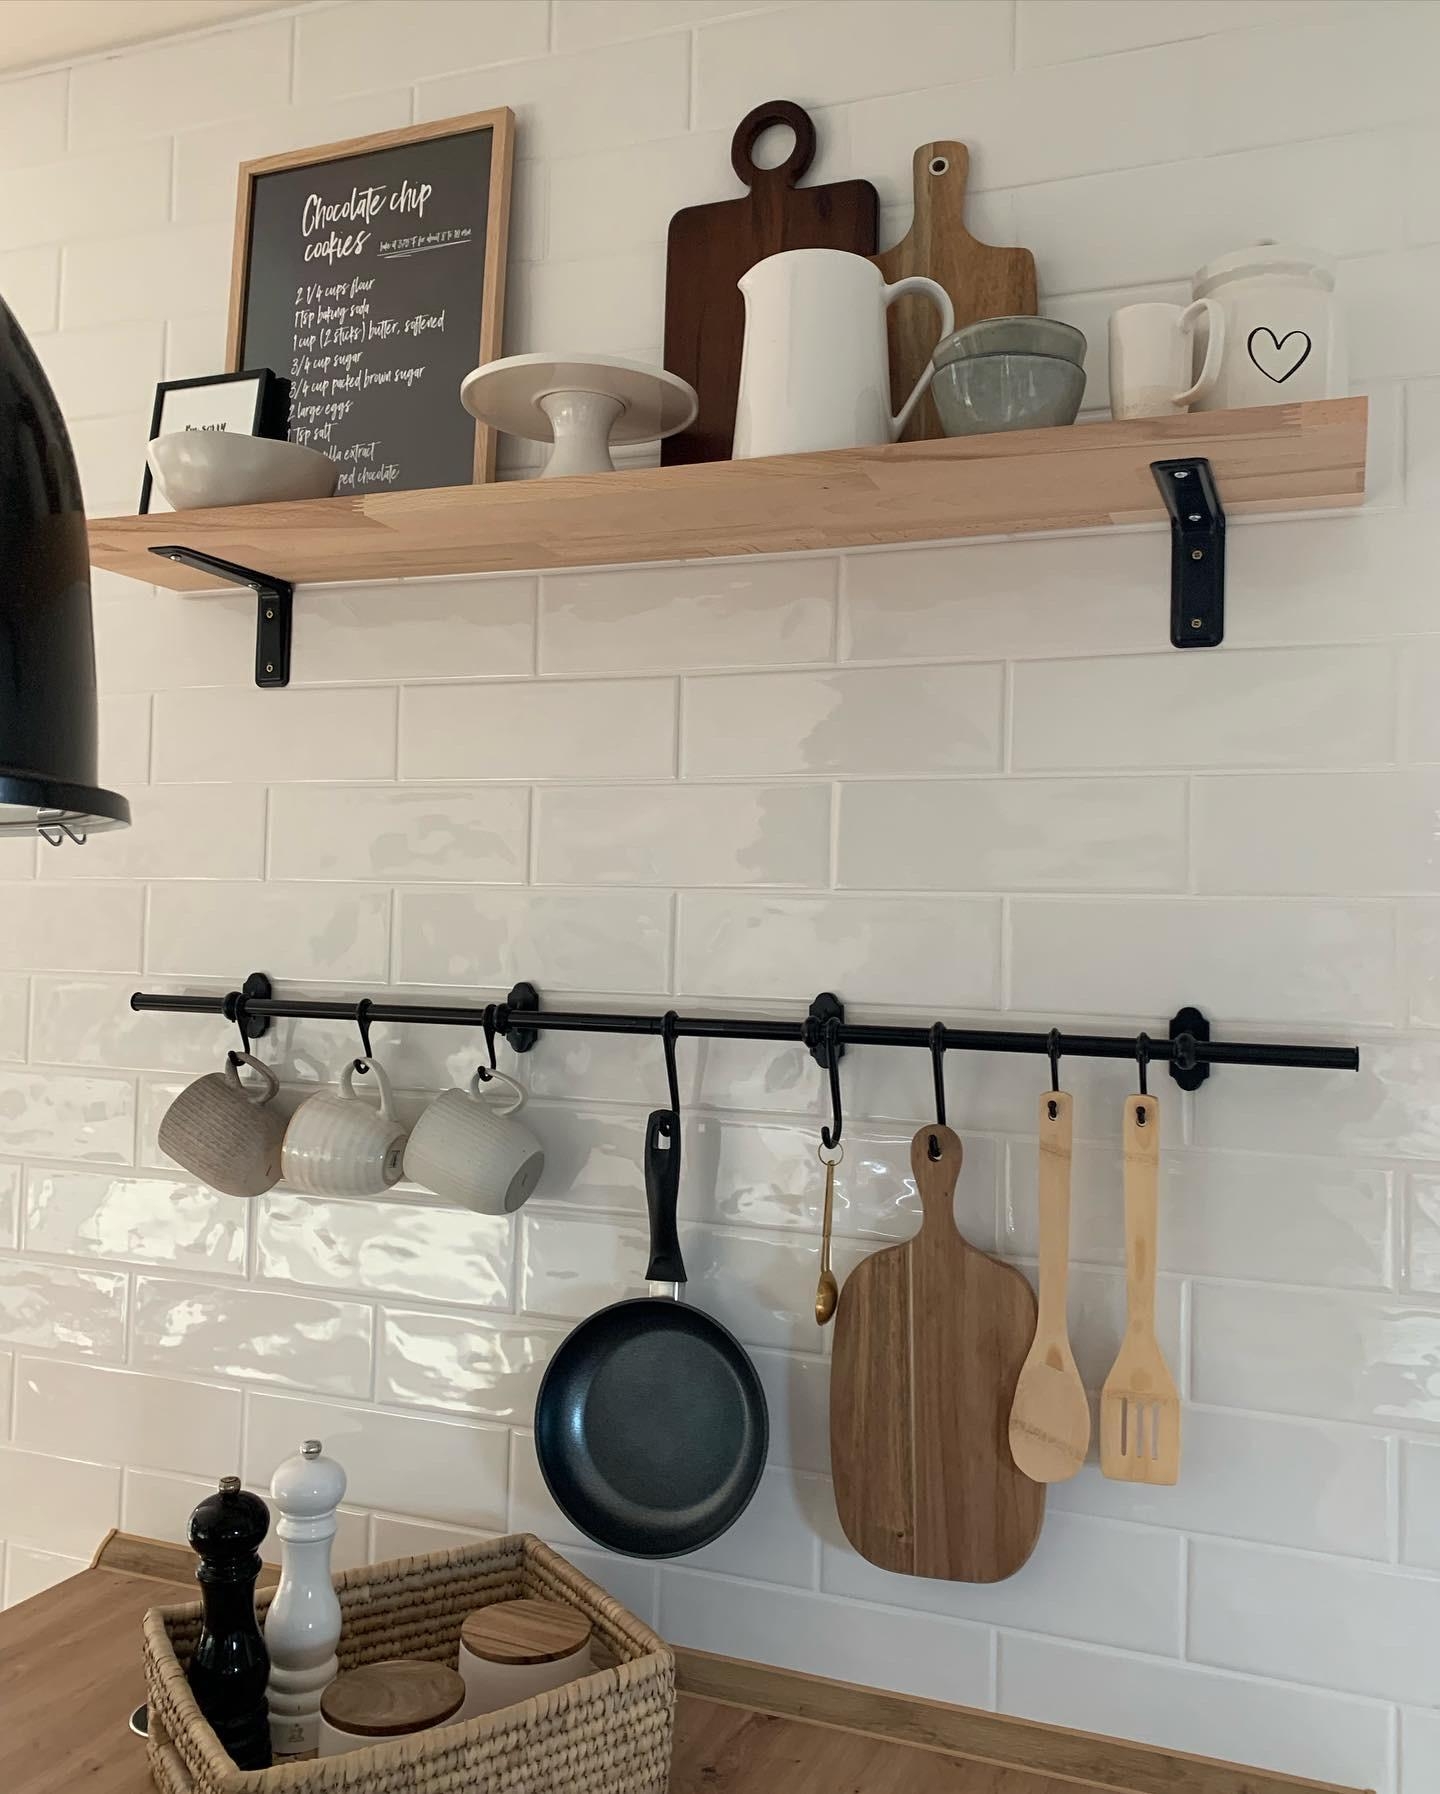 Unsere Kücheninselwand 🥰

#kitcheninspo #modernfarmhouse #metrofliesen #kücheninsel